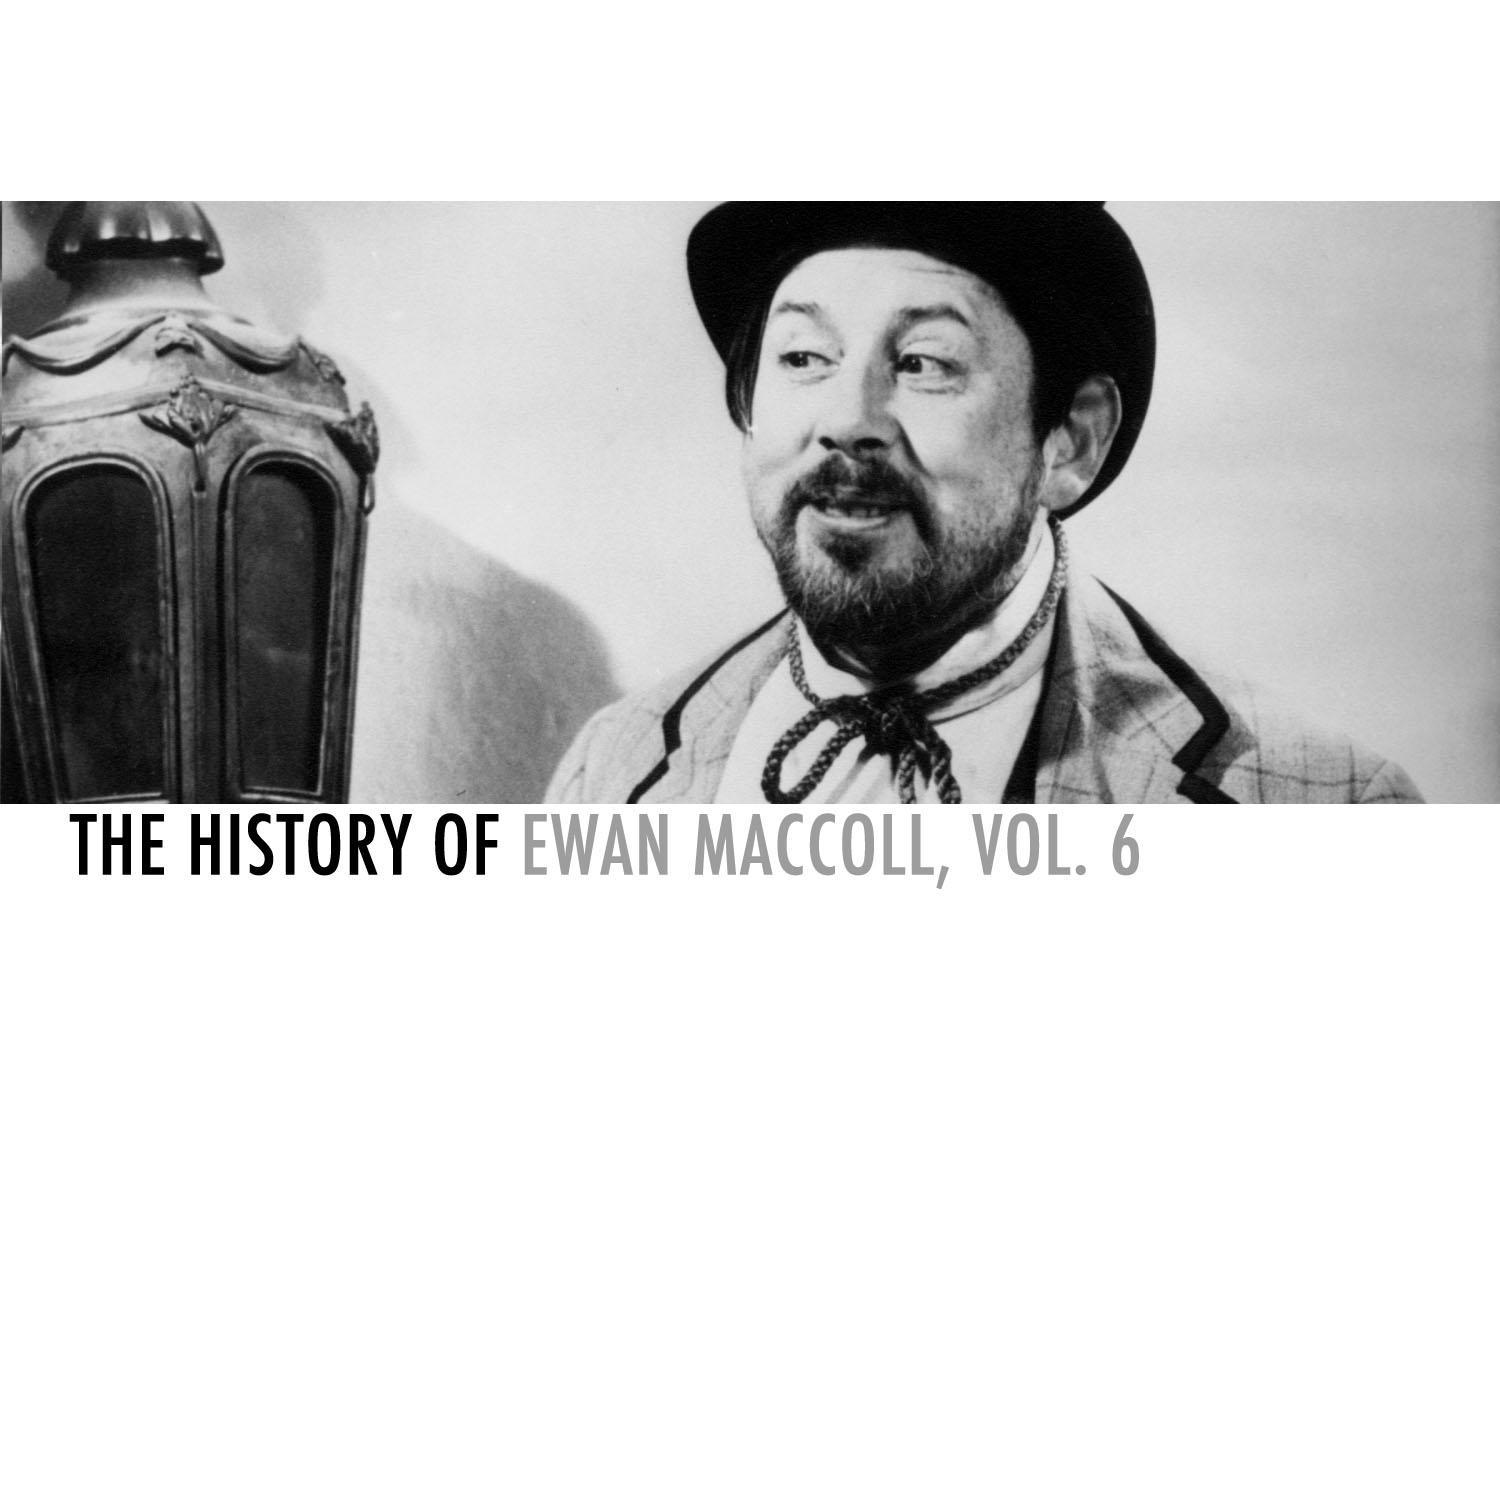 The History of Ewan Maccoll, Vol. 6